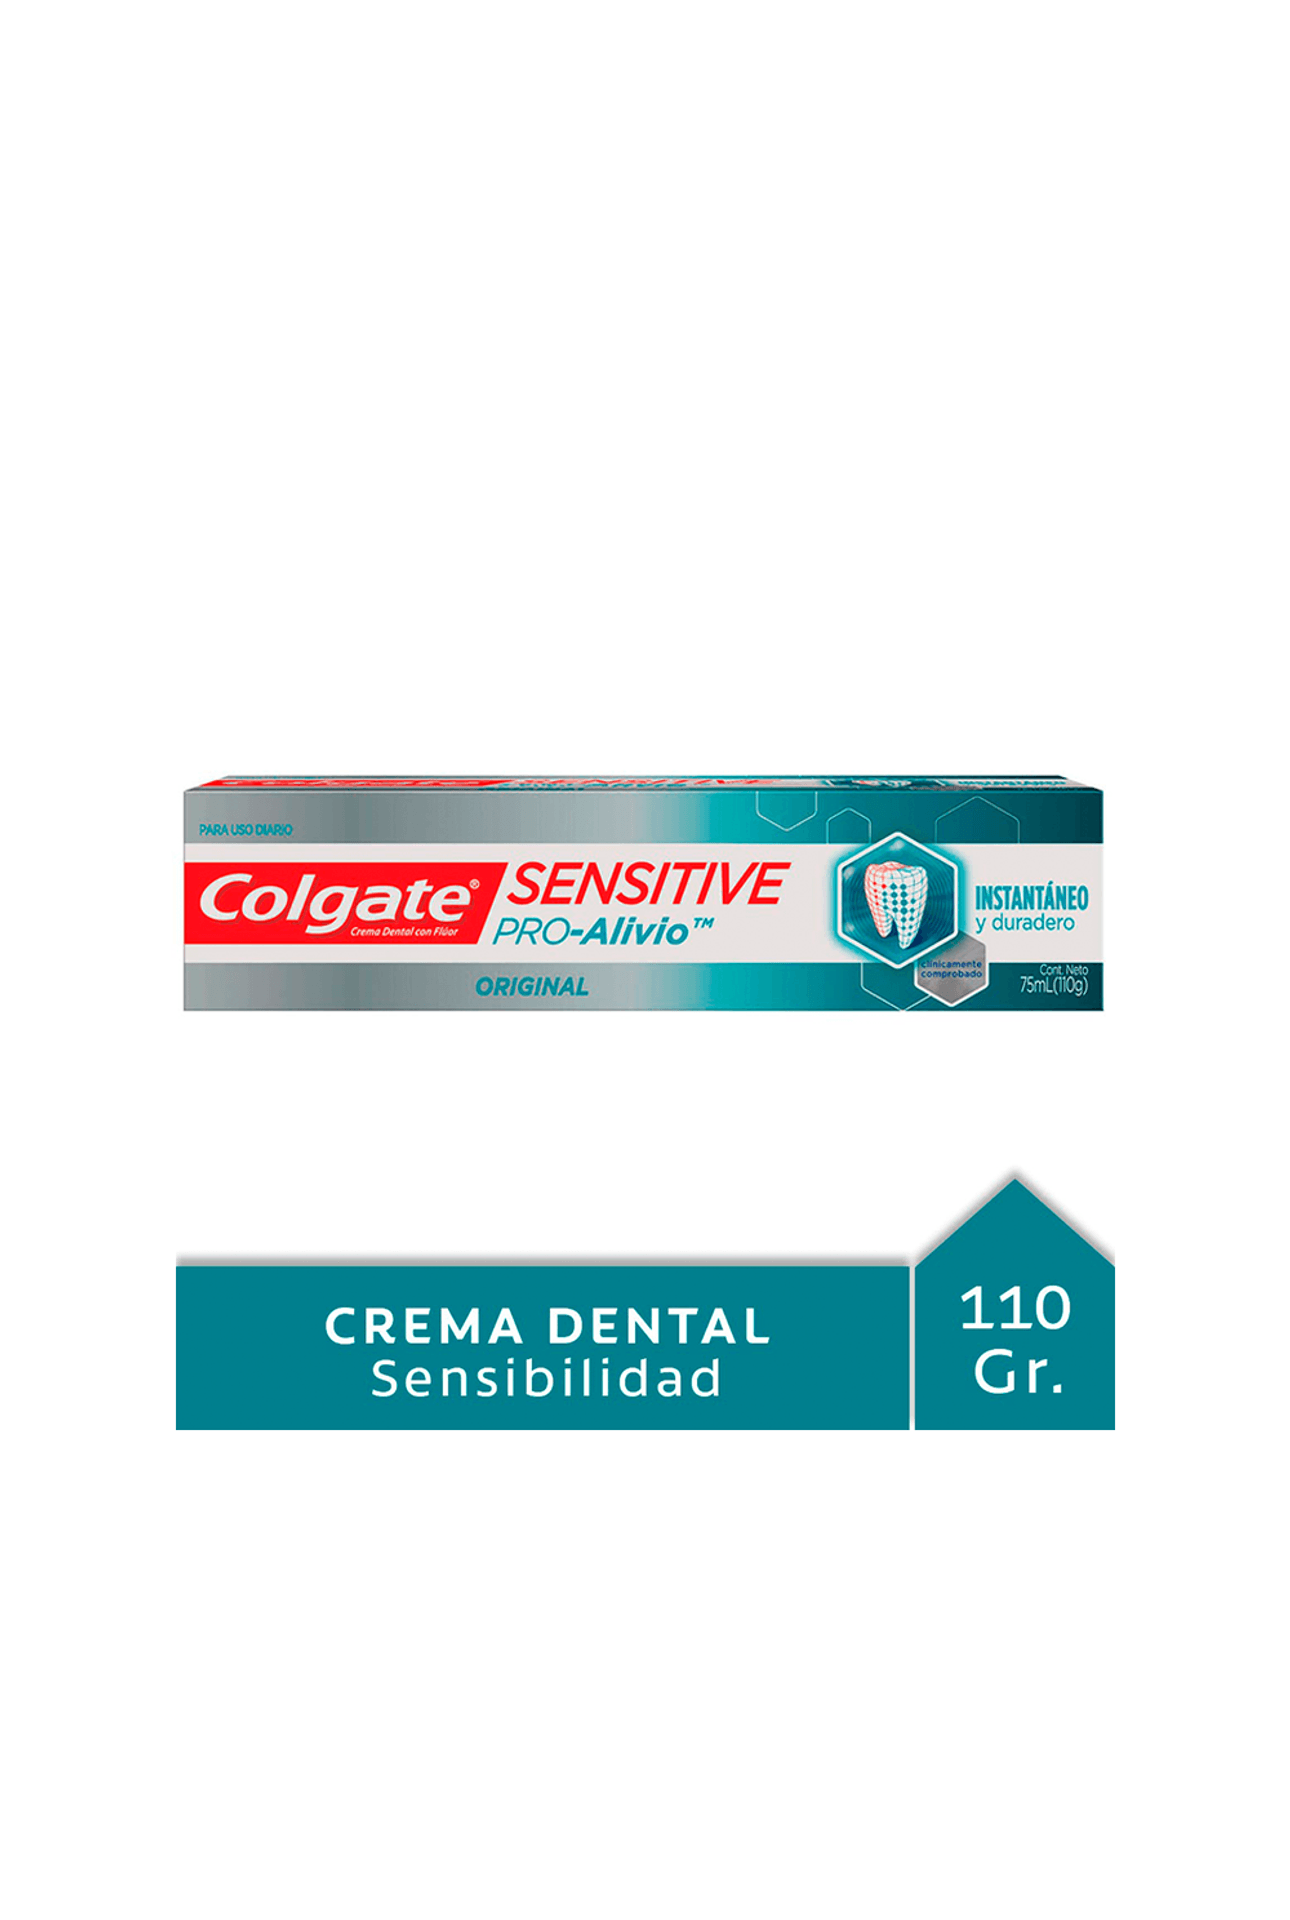 2091875_Colgate-Crema-Dental-Sensitive-Pro-Alivio-x-110-gr_img1